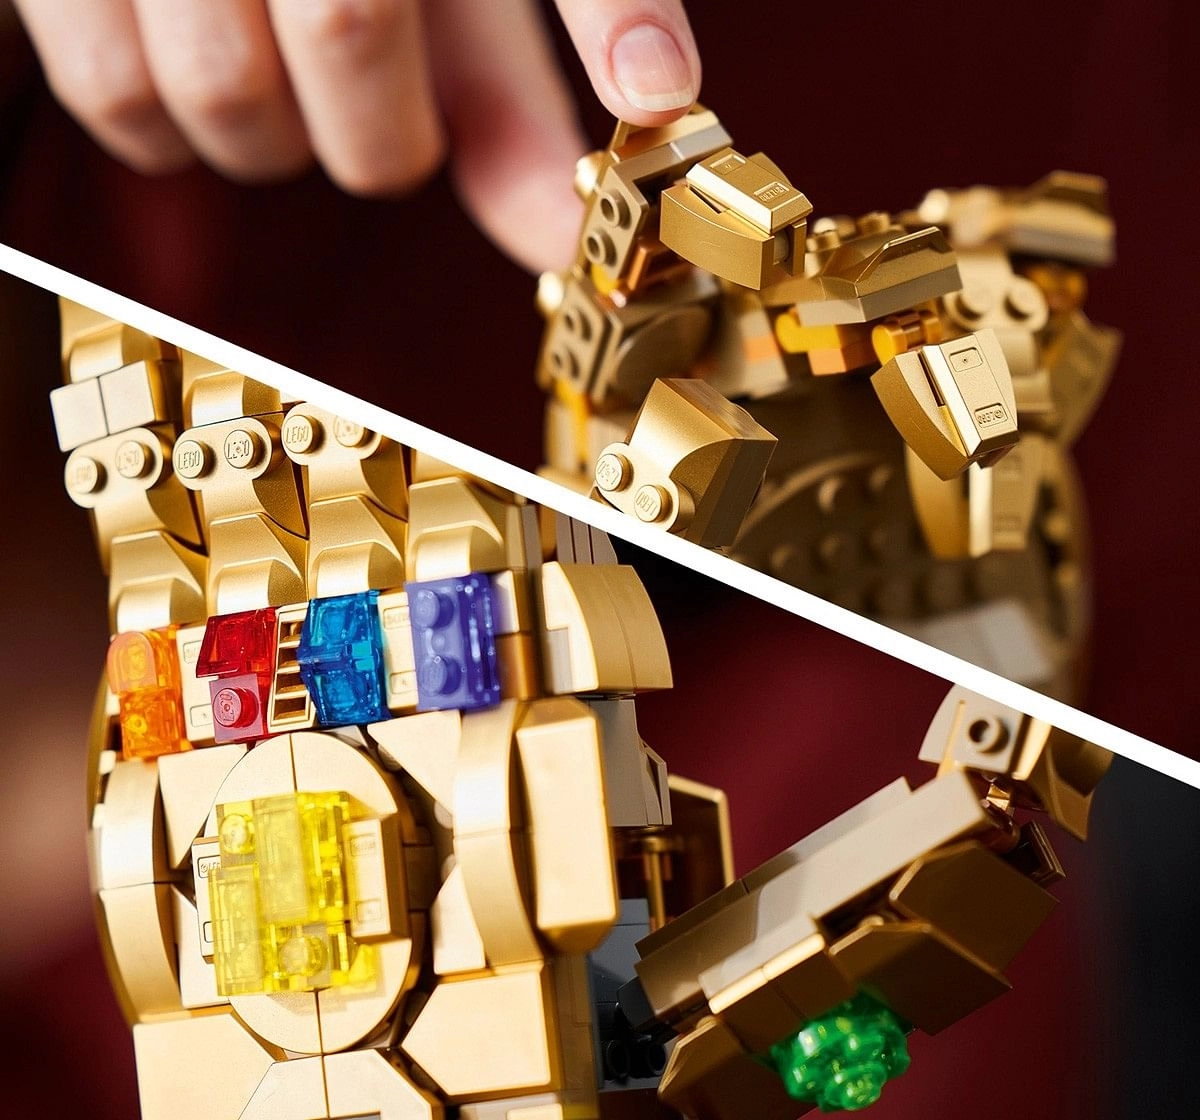 LEGO Marvel Infinity Gauntlet 76191 Building Kit (590 Pieces)